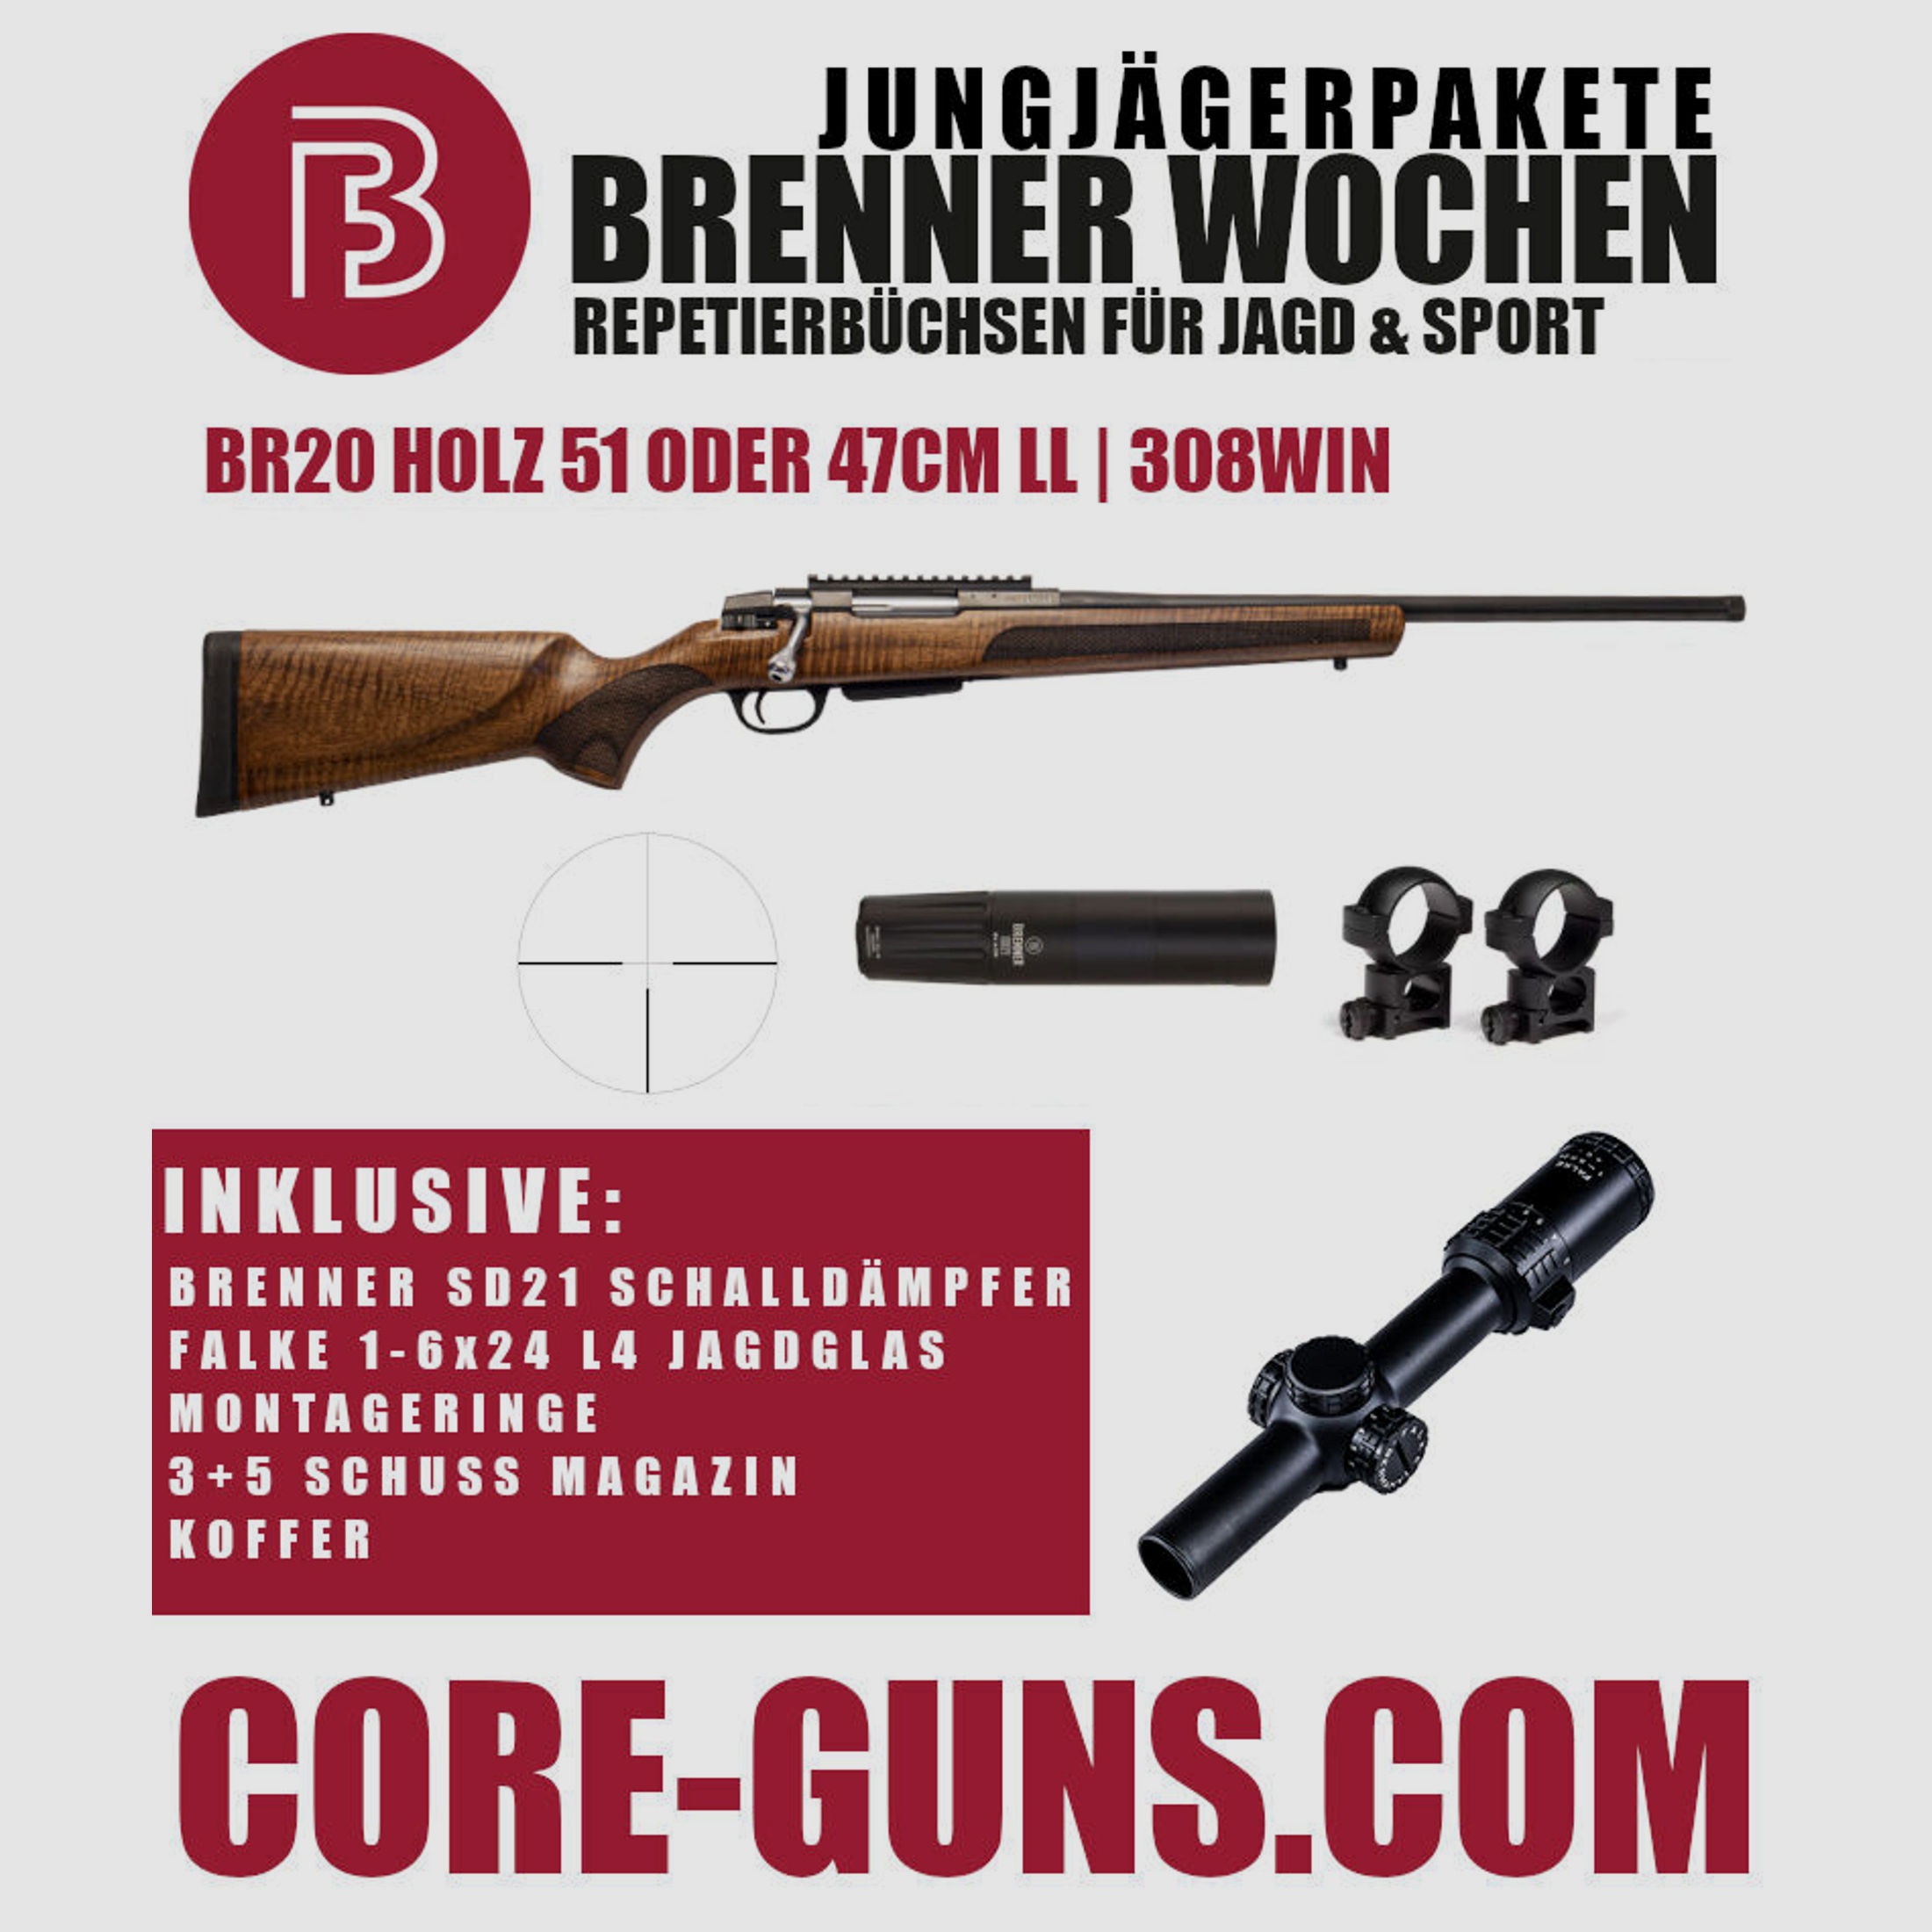 Brenner BR20 Holz 51 oder 47cm LL Jägerpaket UVP: 1560€	 inkl. Brenner SD21 + Falke 1-6x24 L4 + Montageringe + Koffer inkl. 3+5 Schuss Magazin